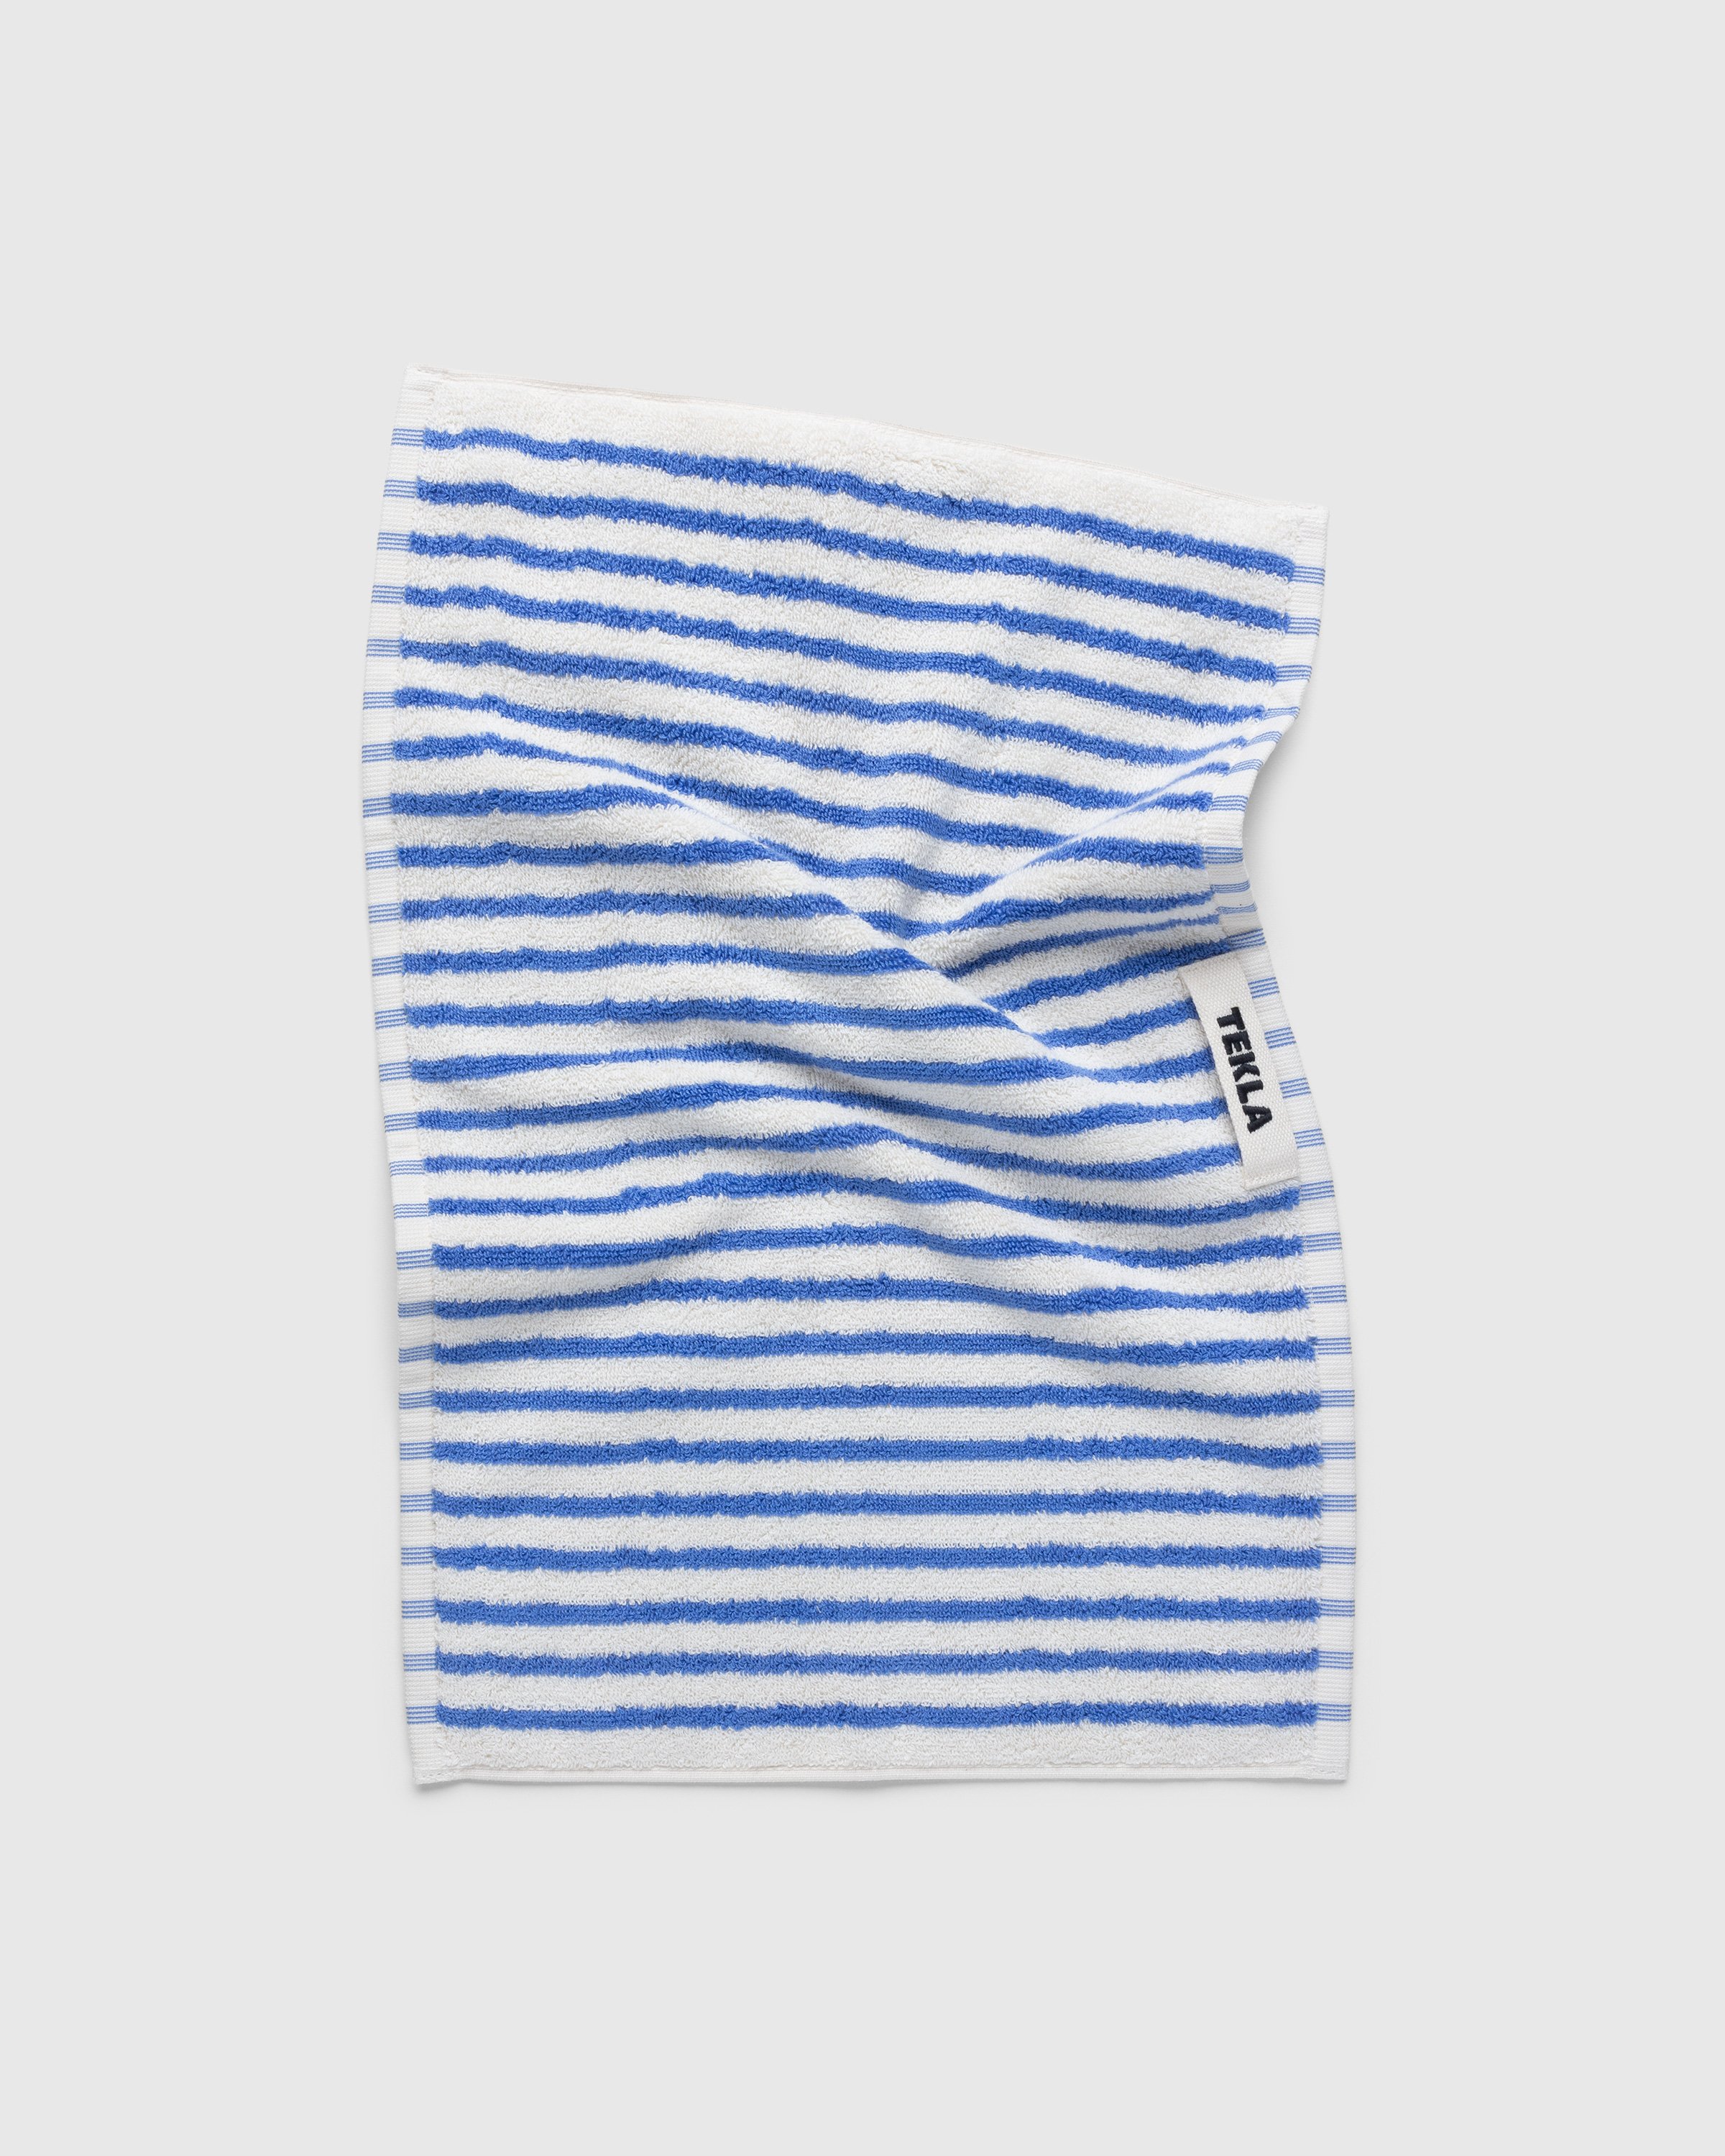 Tekla - Guest Towel Coastal Stripes - Lifestyle - Multi - Image 1